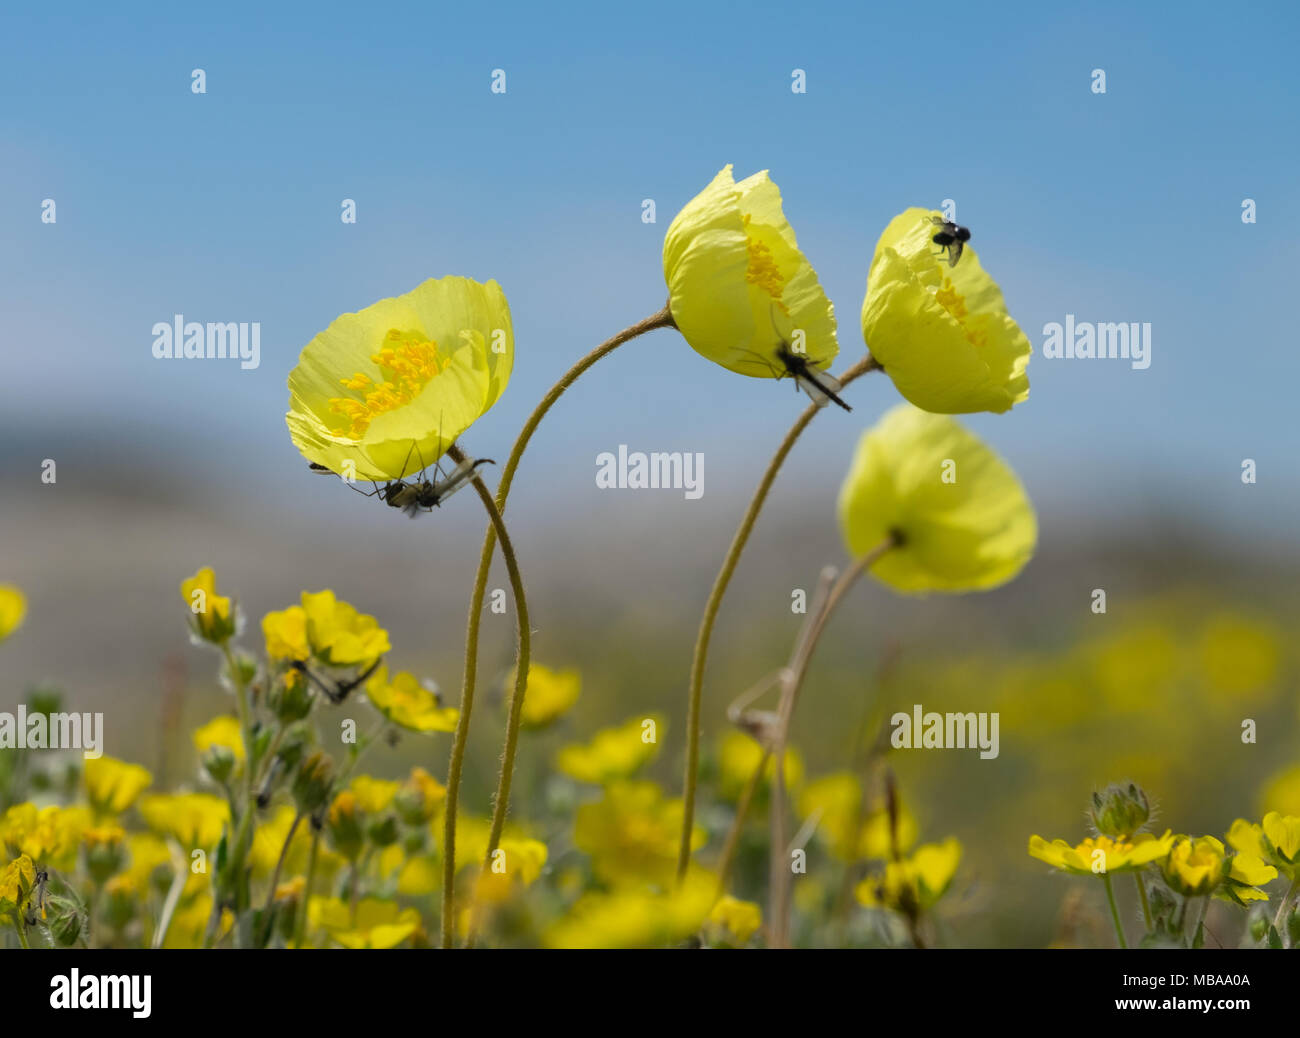 Dfgdfgdfg hi-res stock photography and images - Alamy